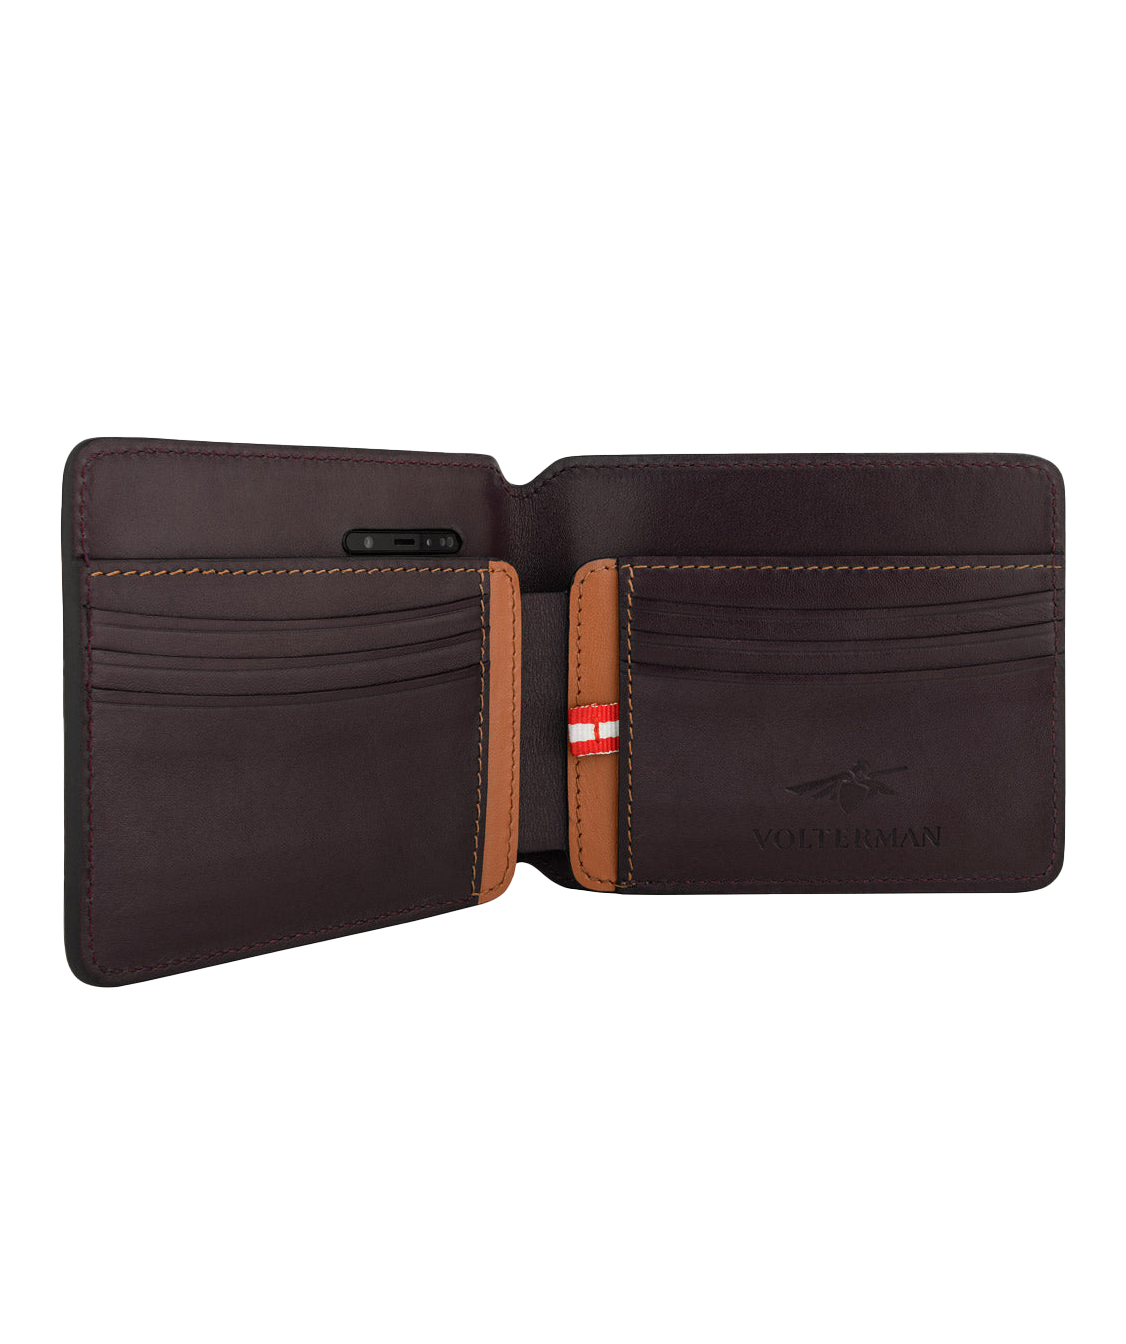 Smart wallet ''Volterman'' Bifold, brown